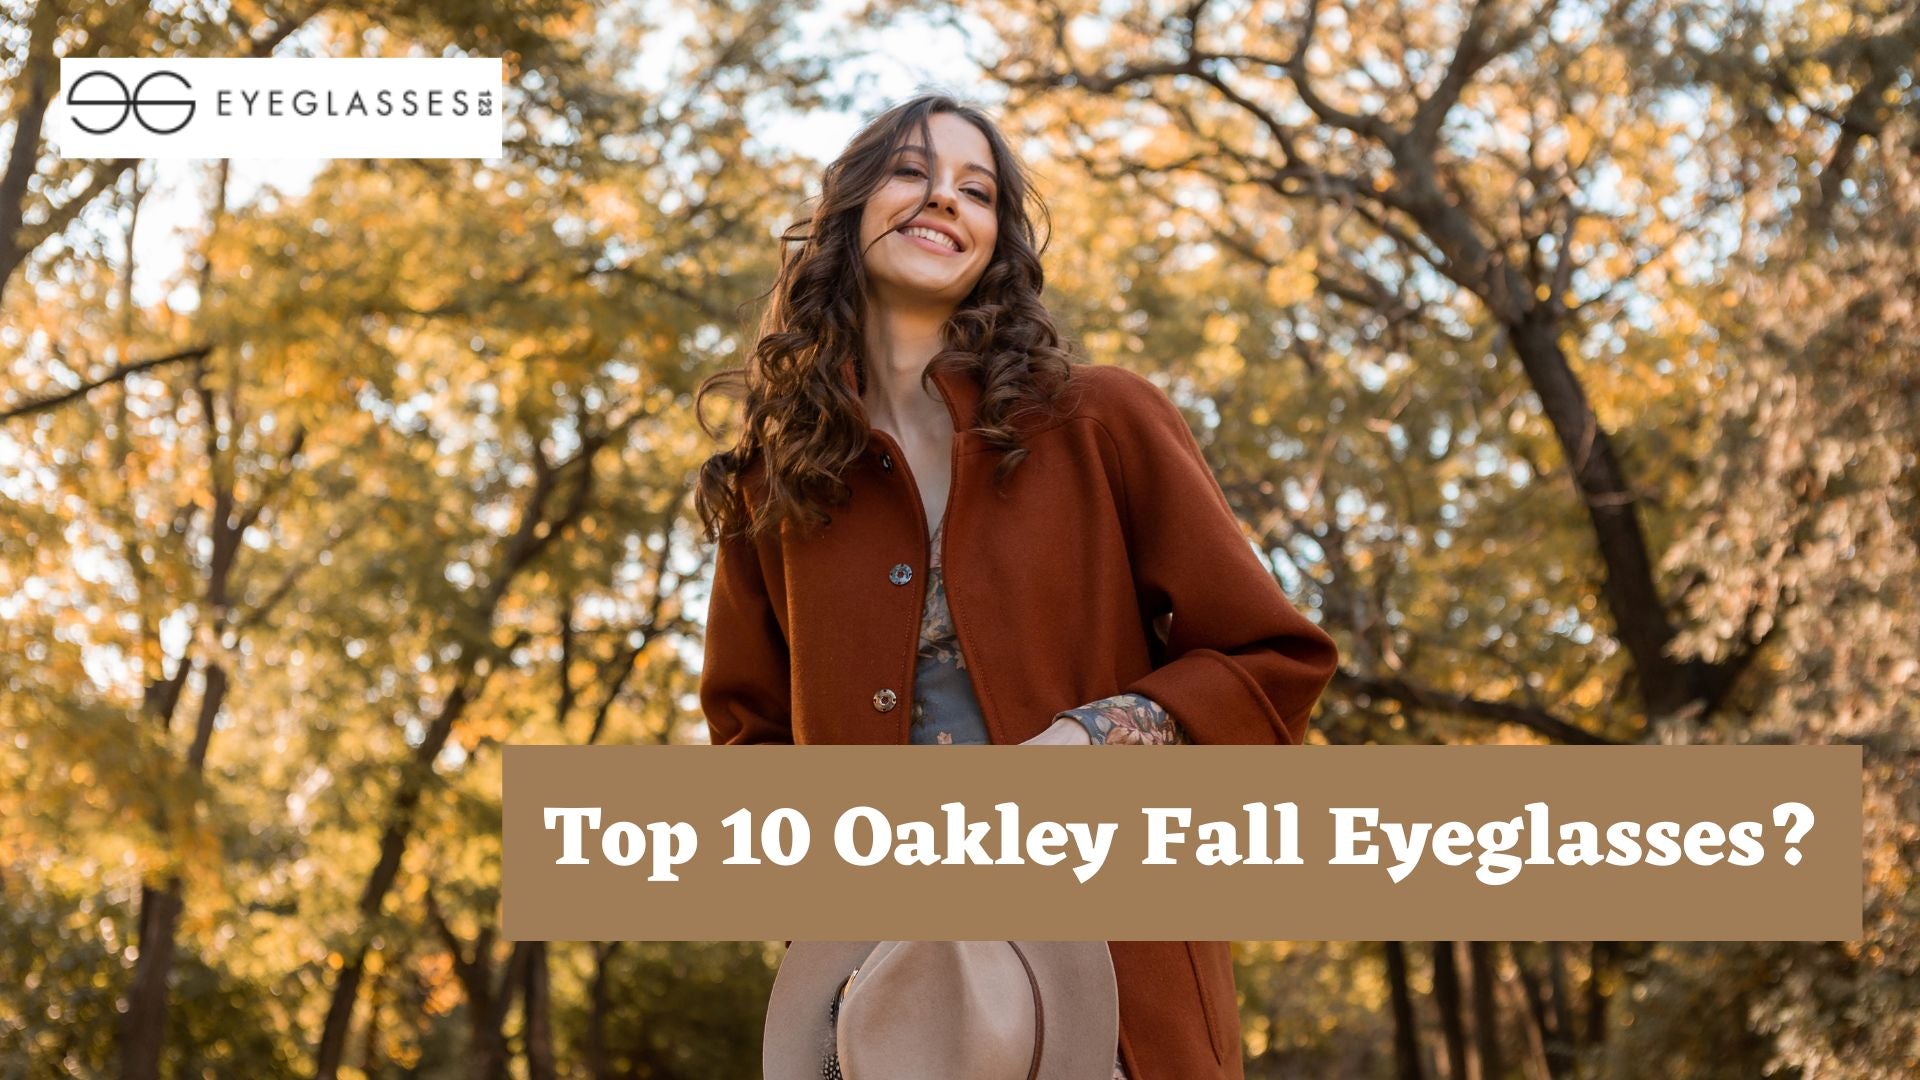 Top 10 Oakley Fall Eyeglasses?